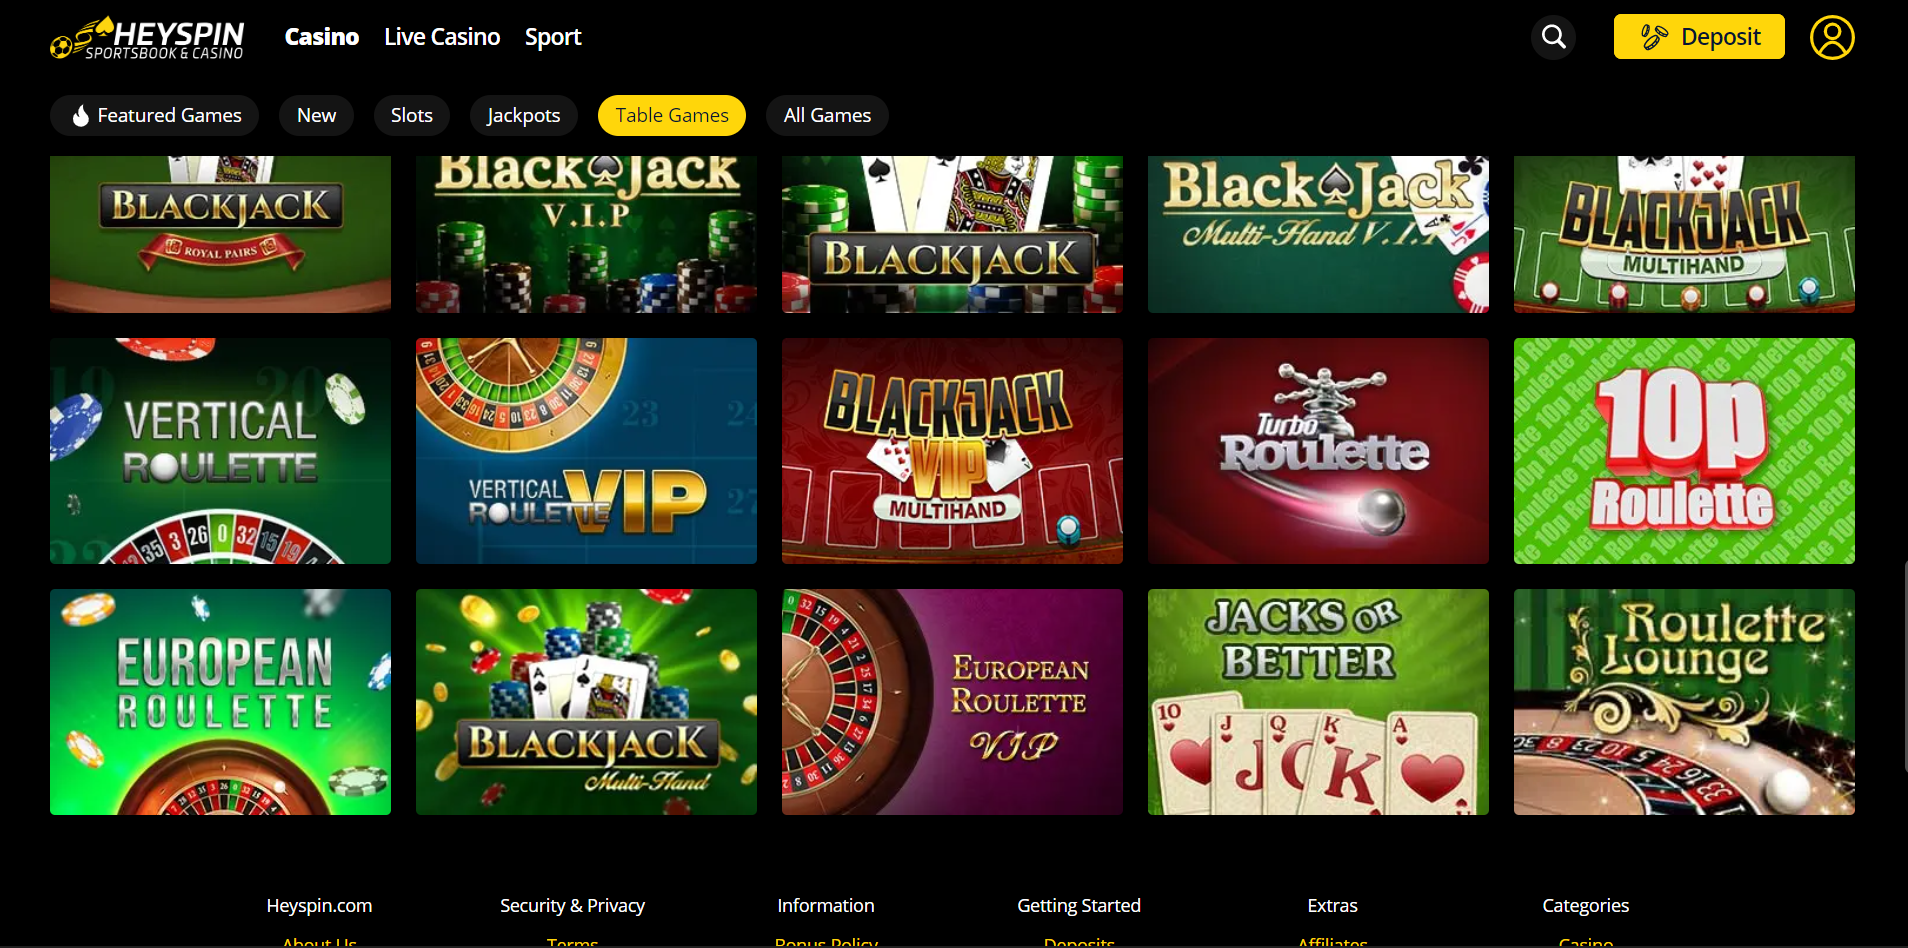 HeySpin Casino roulette titles.